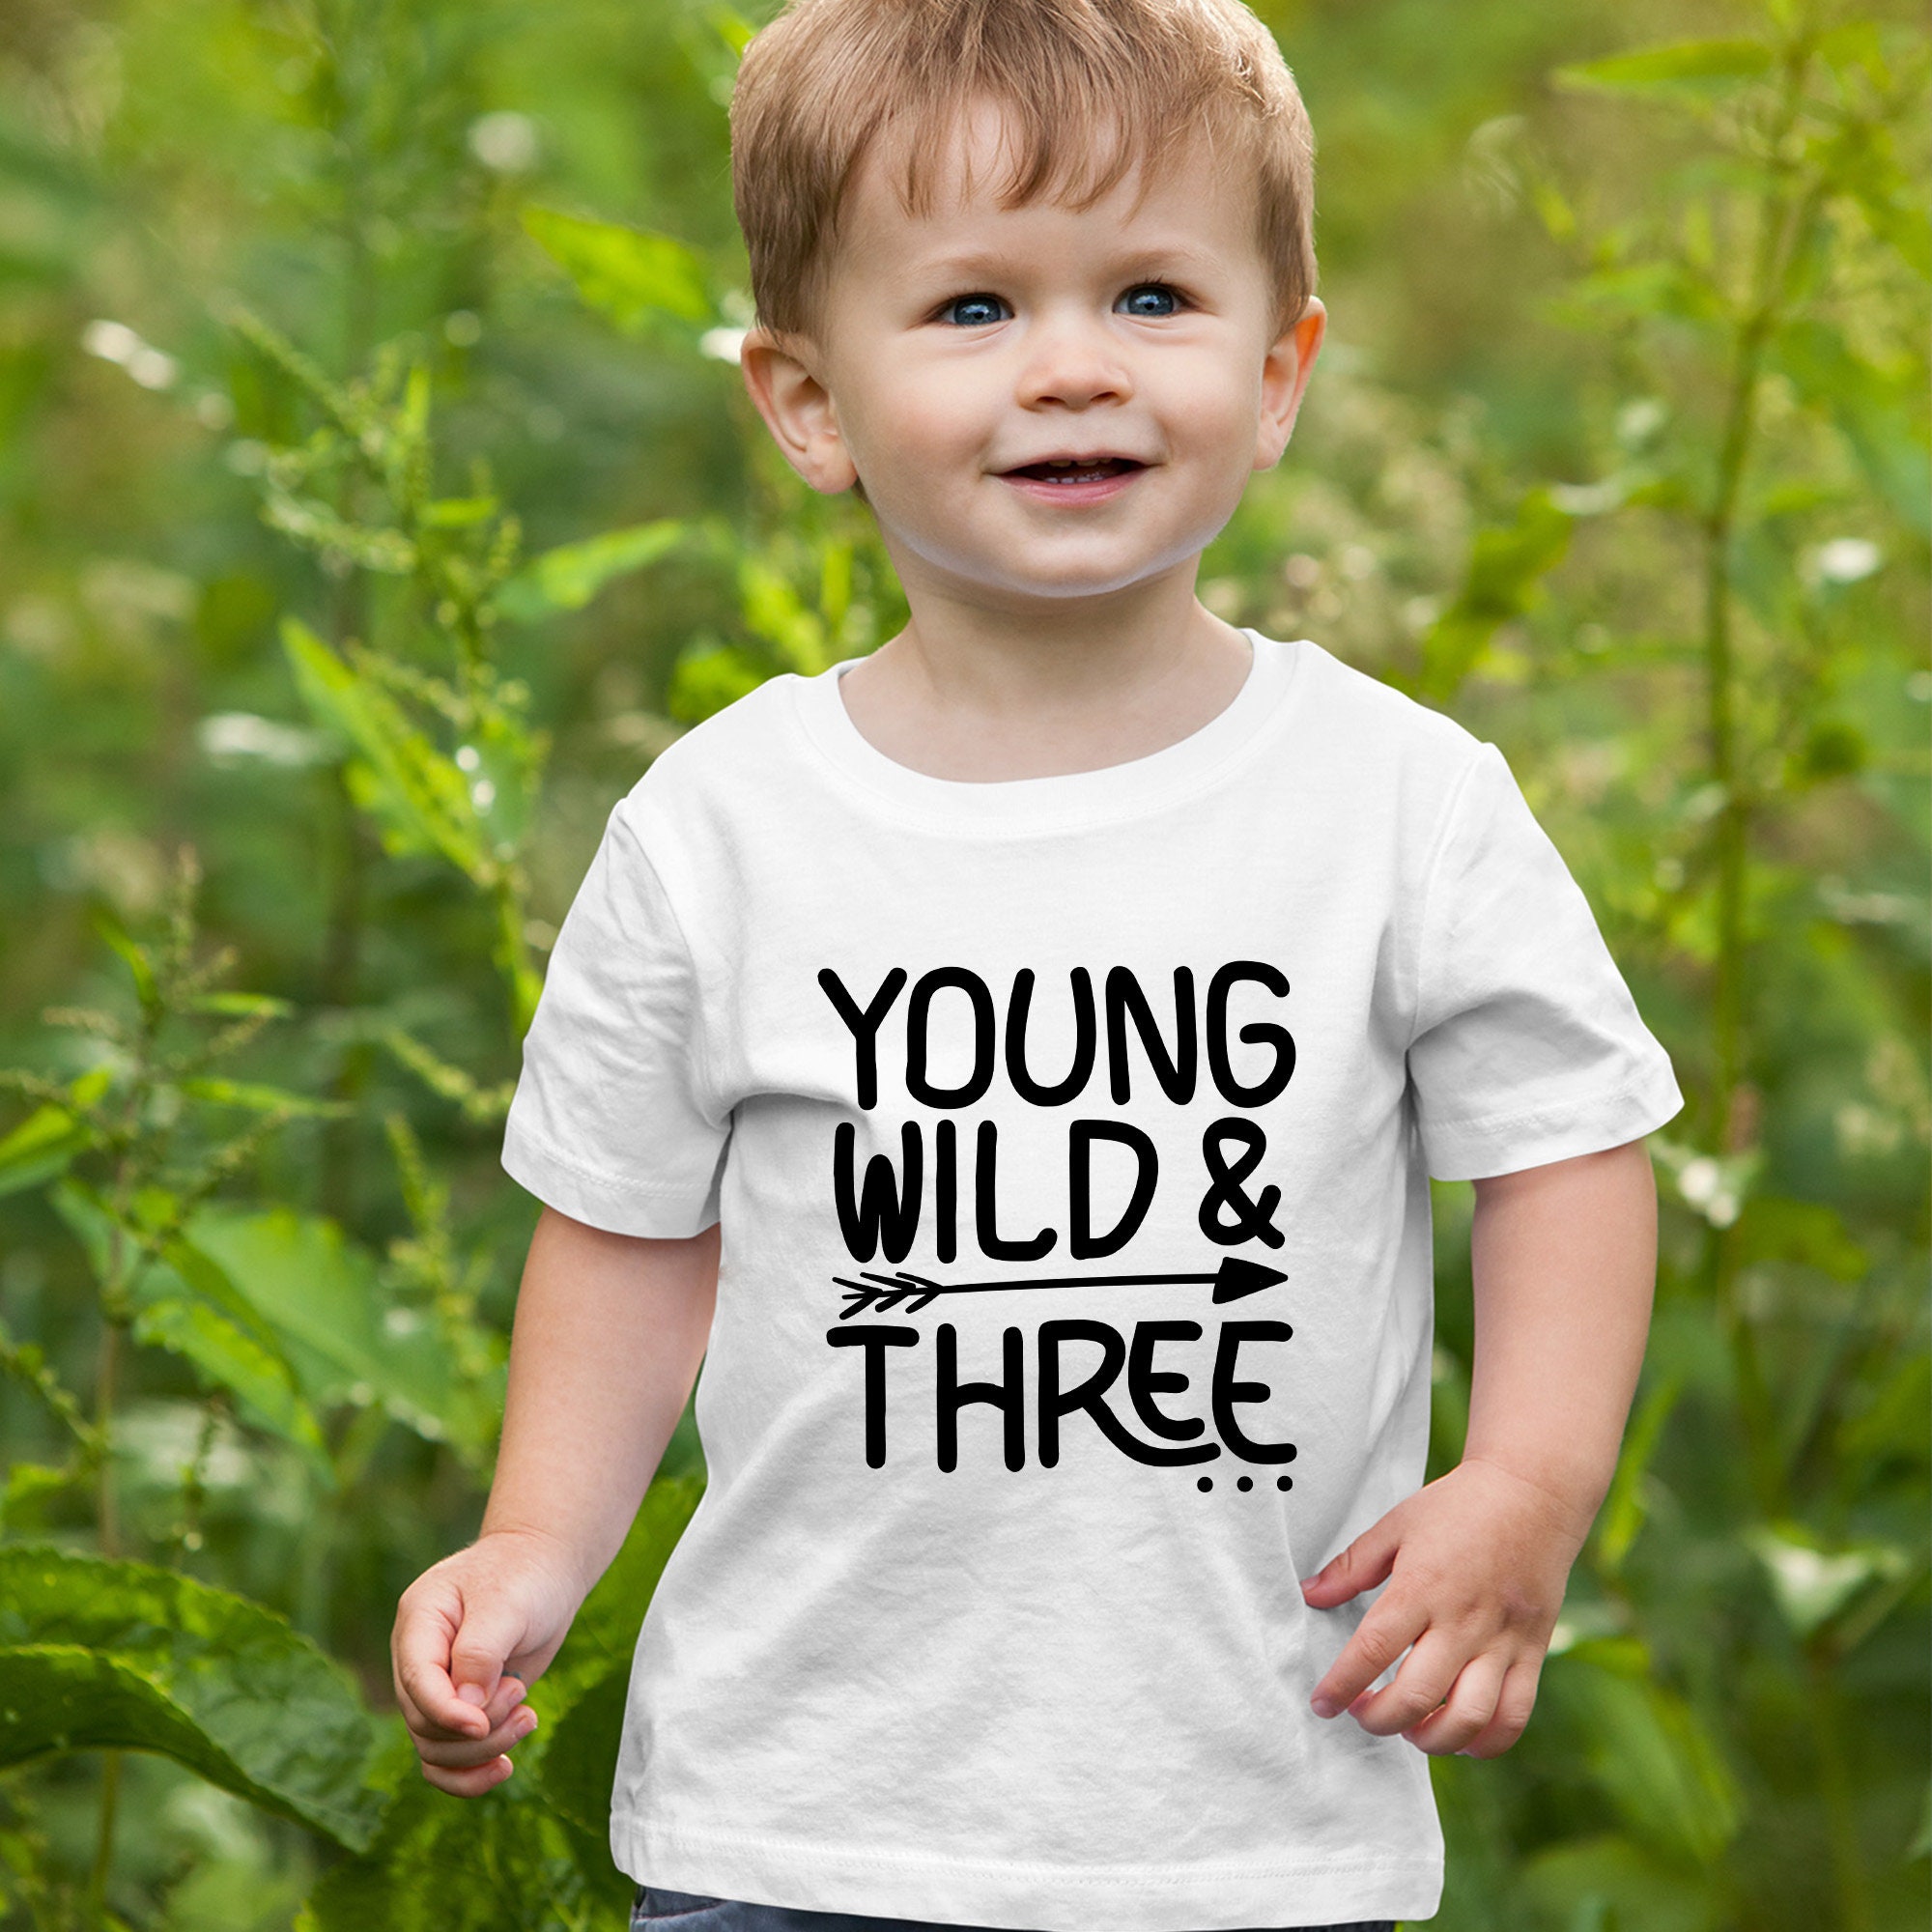 Wild & Three Toddler Tee